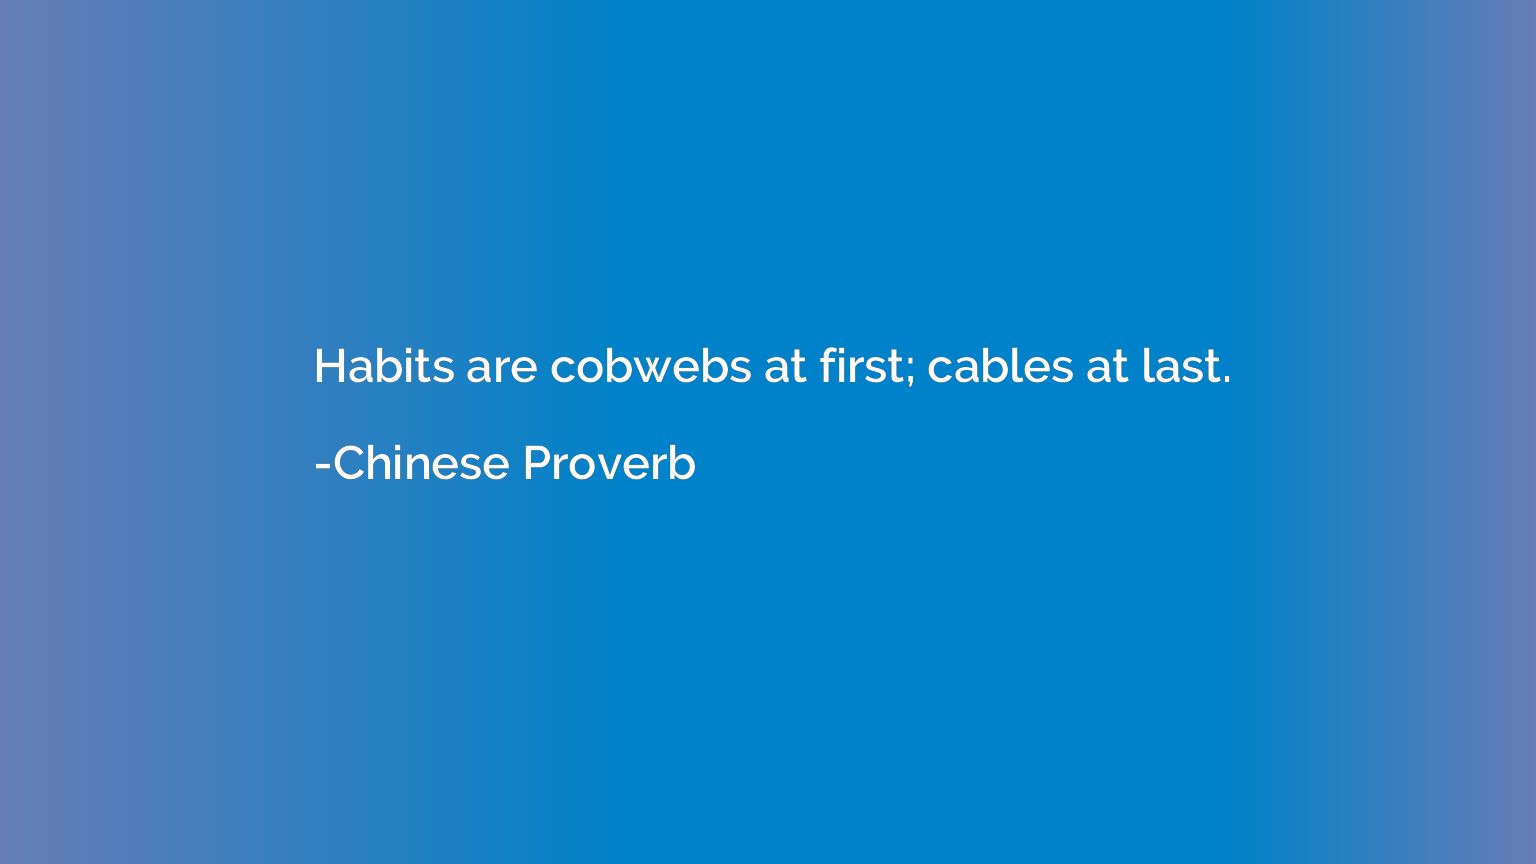 Habits are cobwebs at first; cables at last.